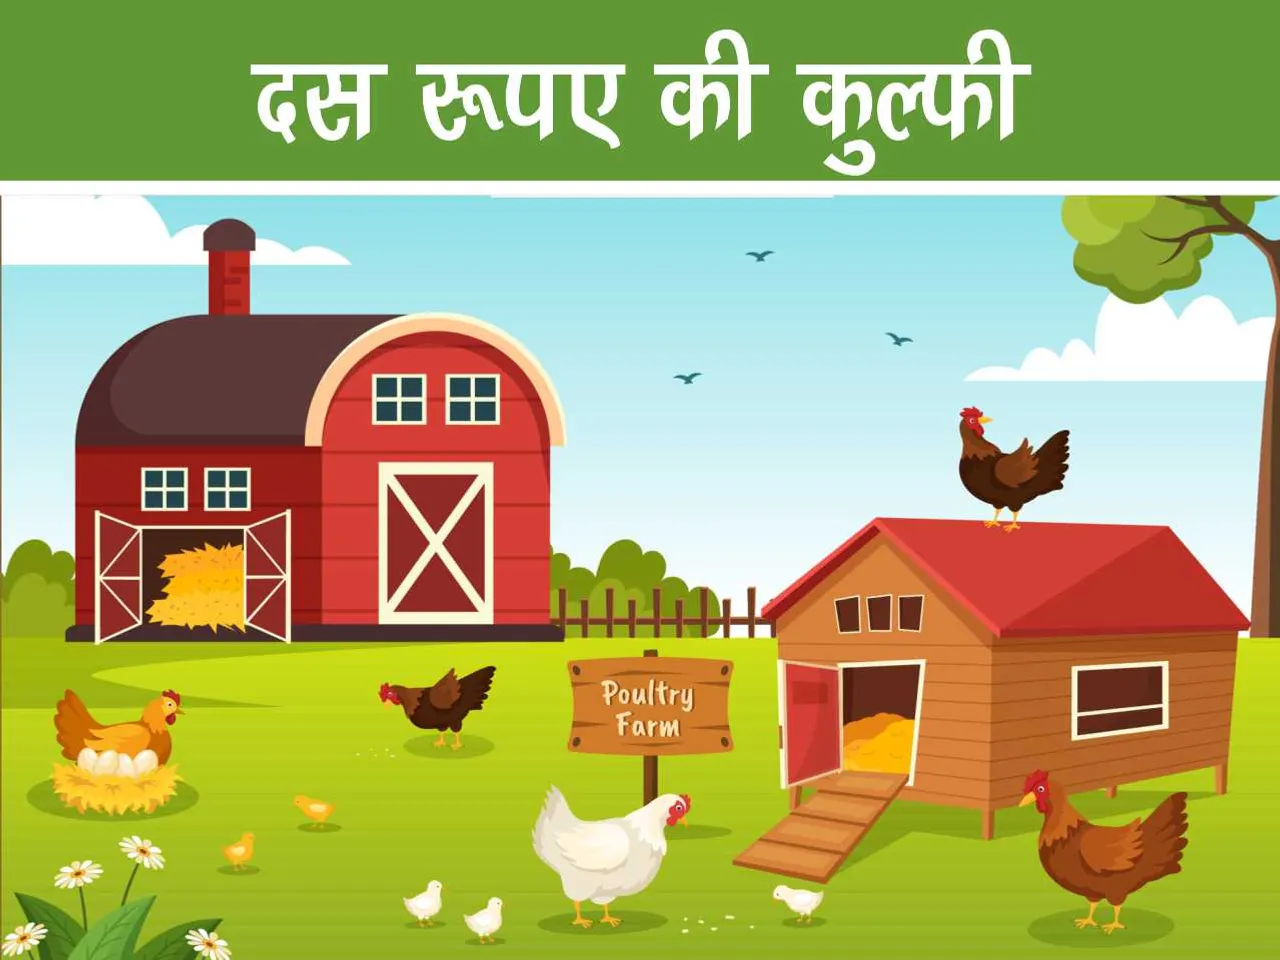 Poultry farm cartoon image